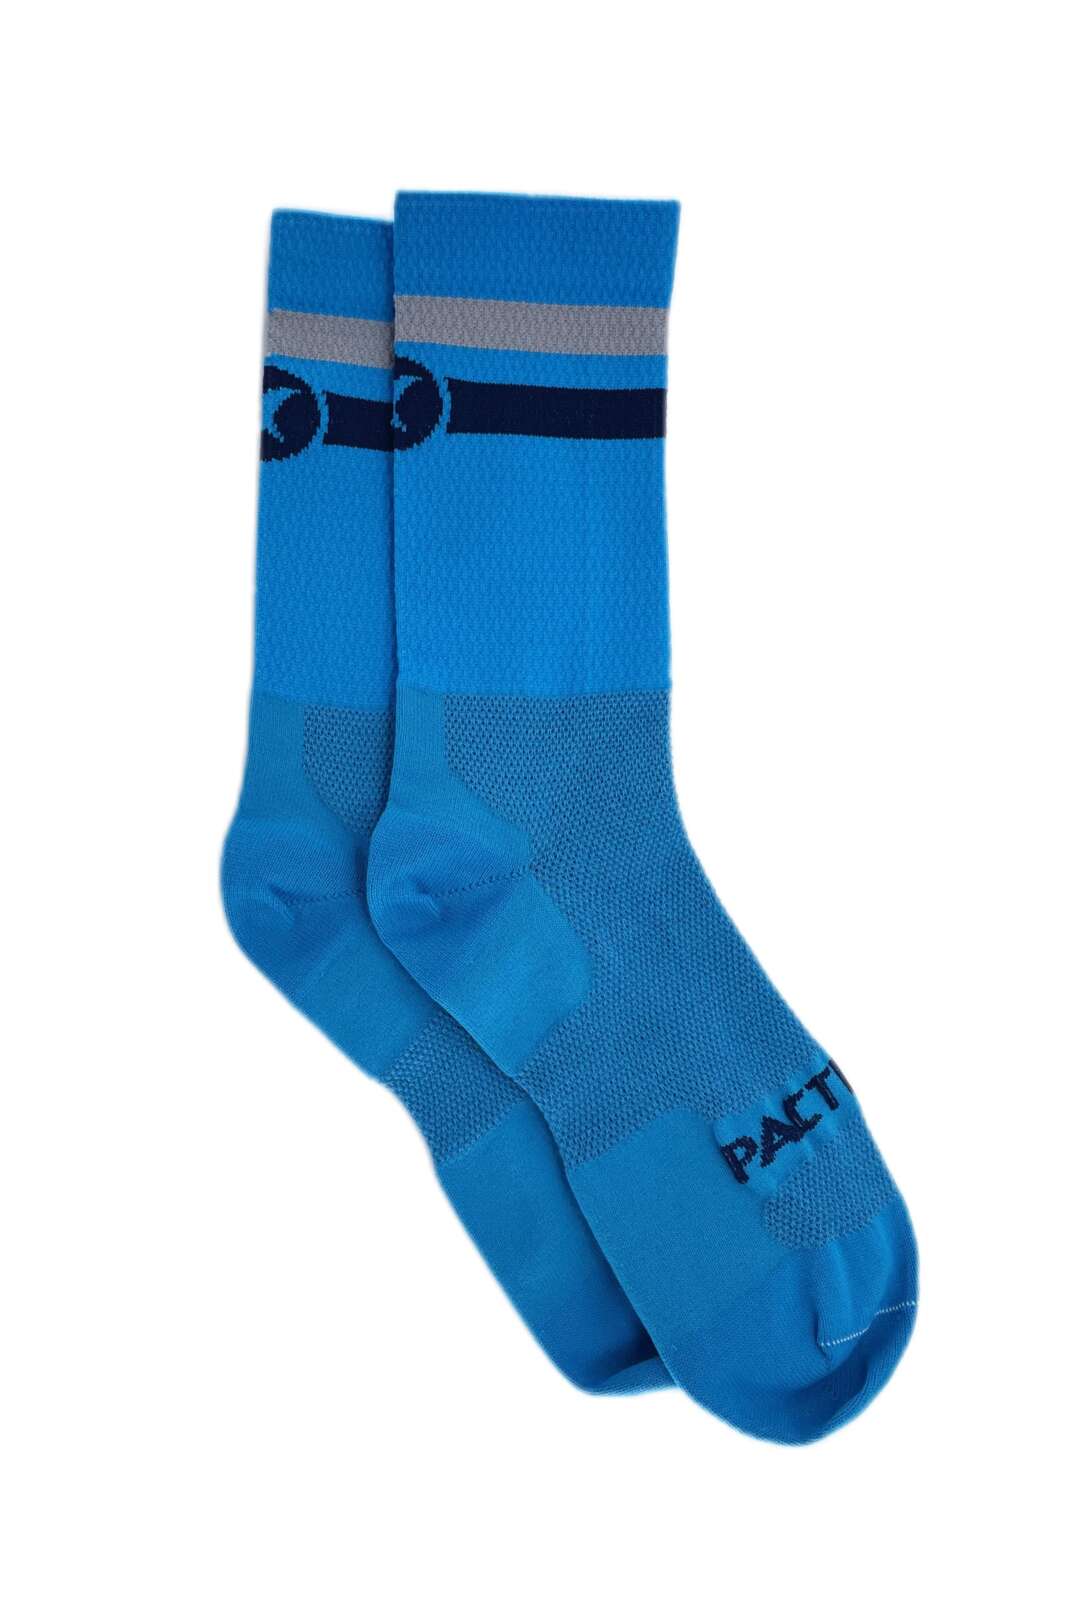 Blue Cycling Socks - Summit Stripe